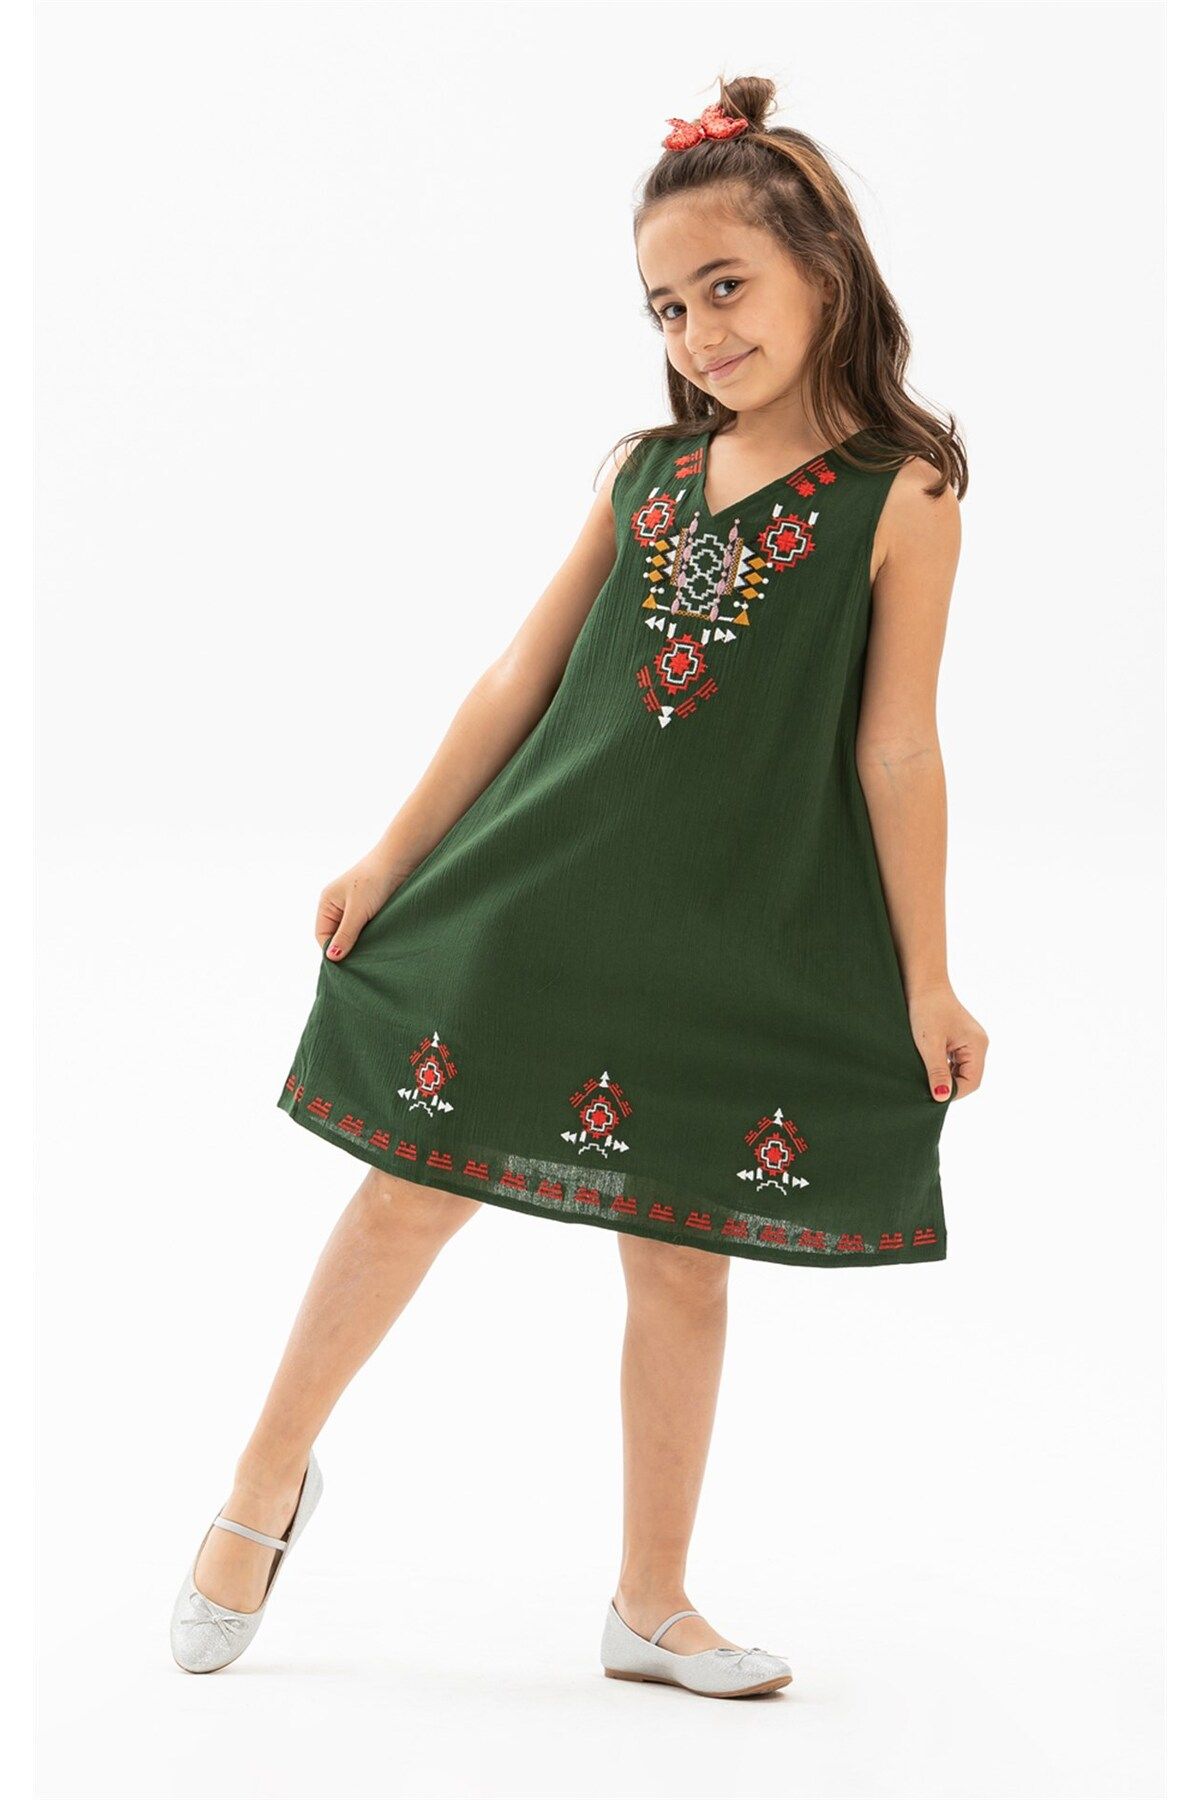 Eliş Şile Bezi لباس دخترانه پارچه ای Gökçe Shile سبز Ysl